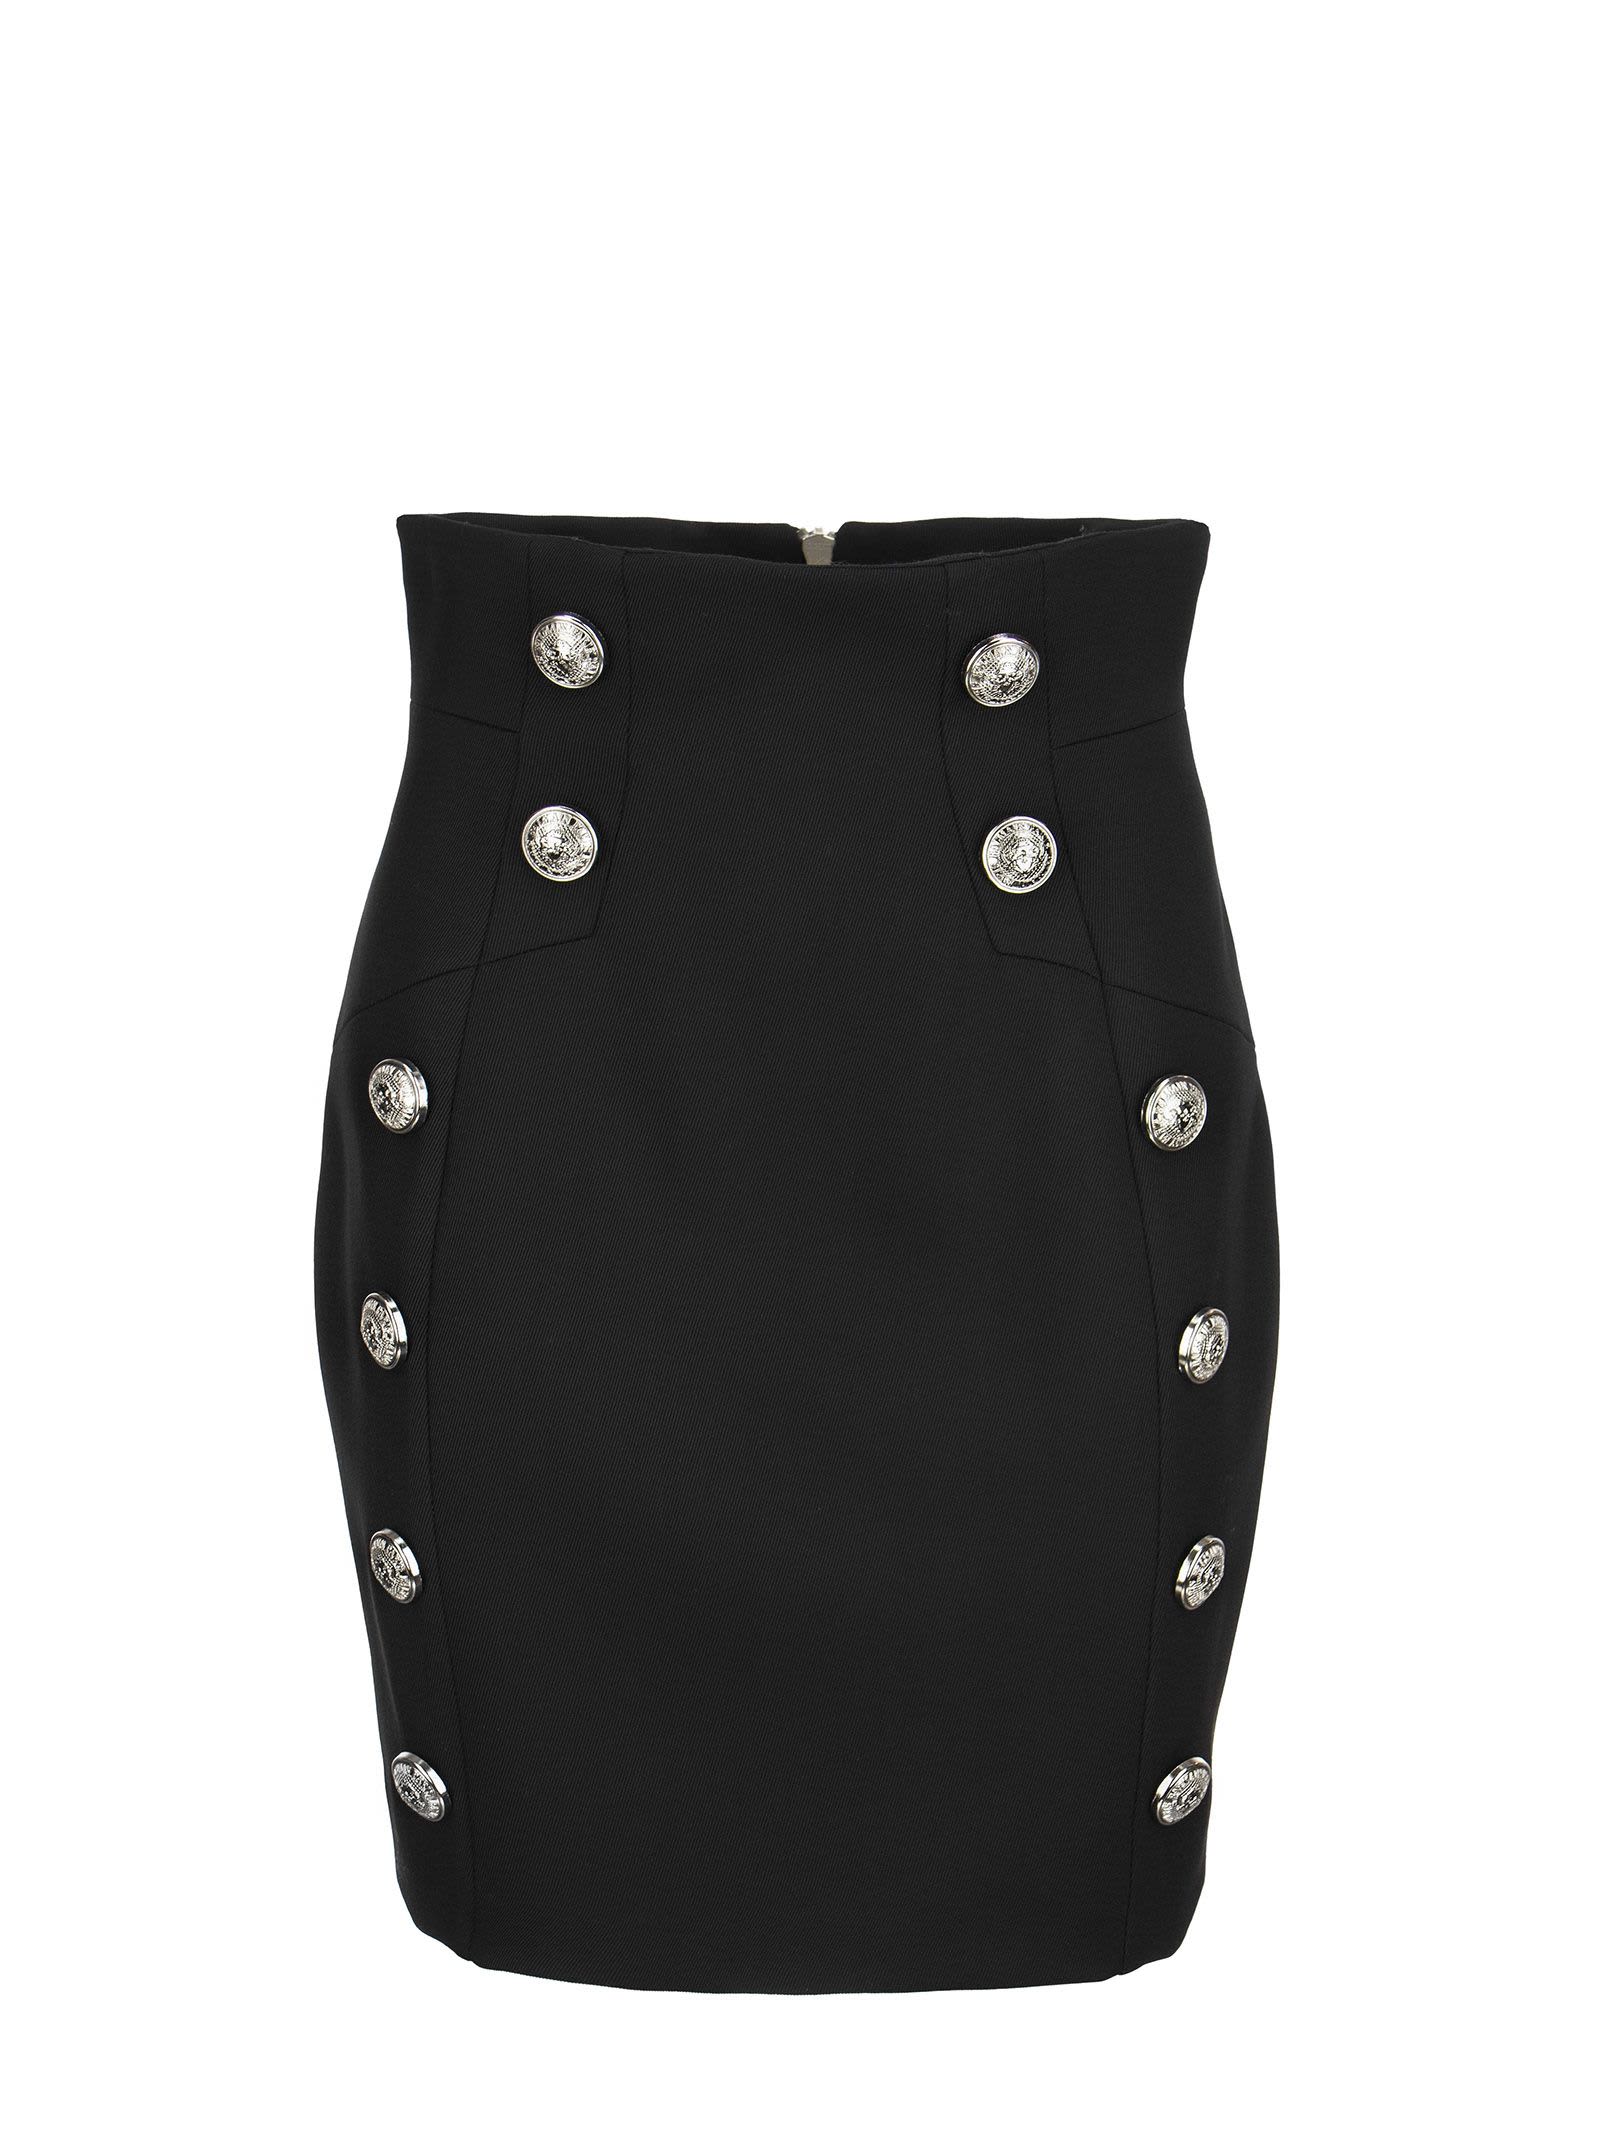 Balmain Short Black Skirt With Double Button